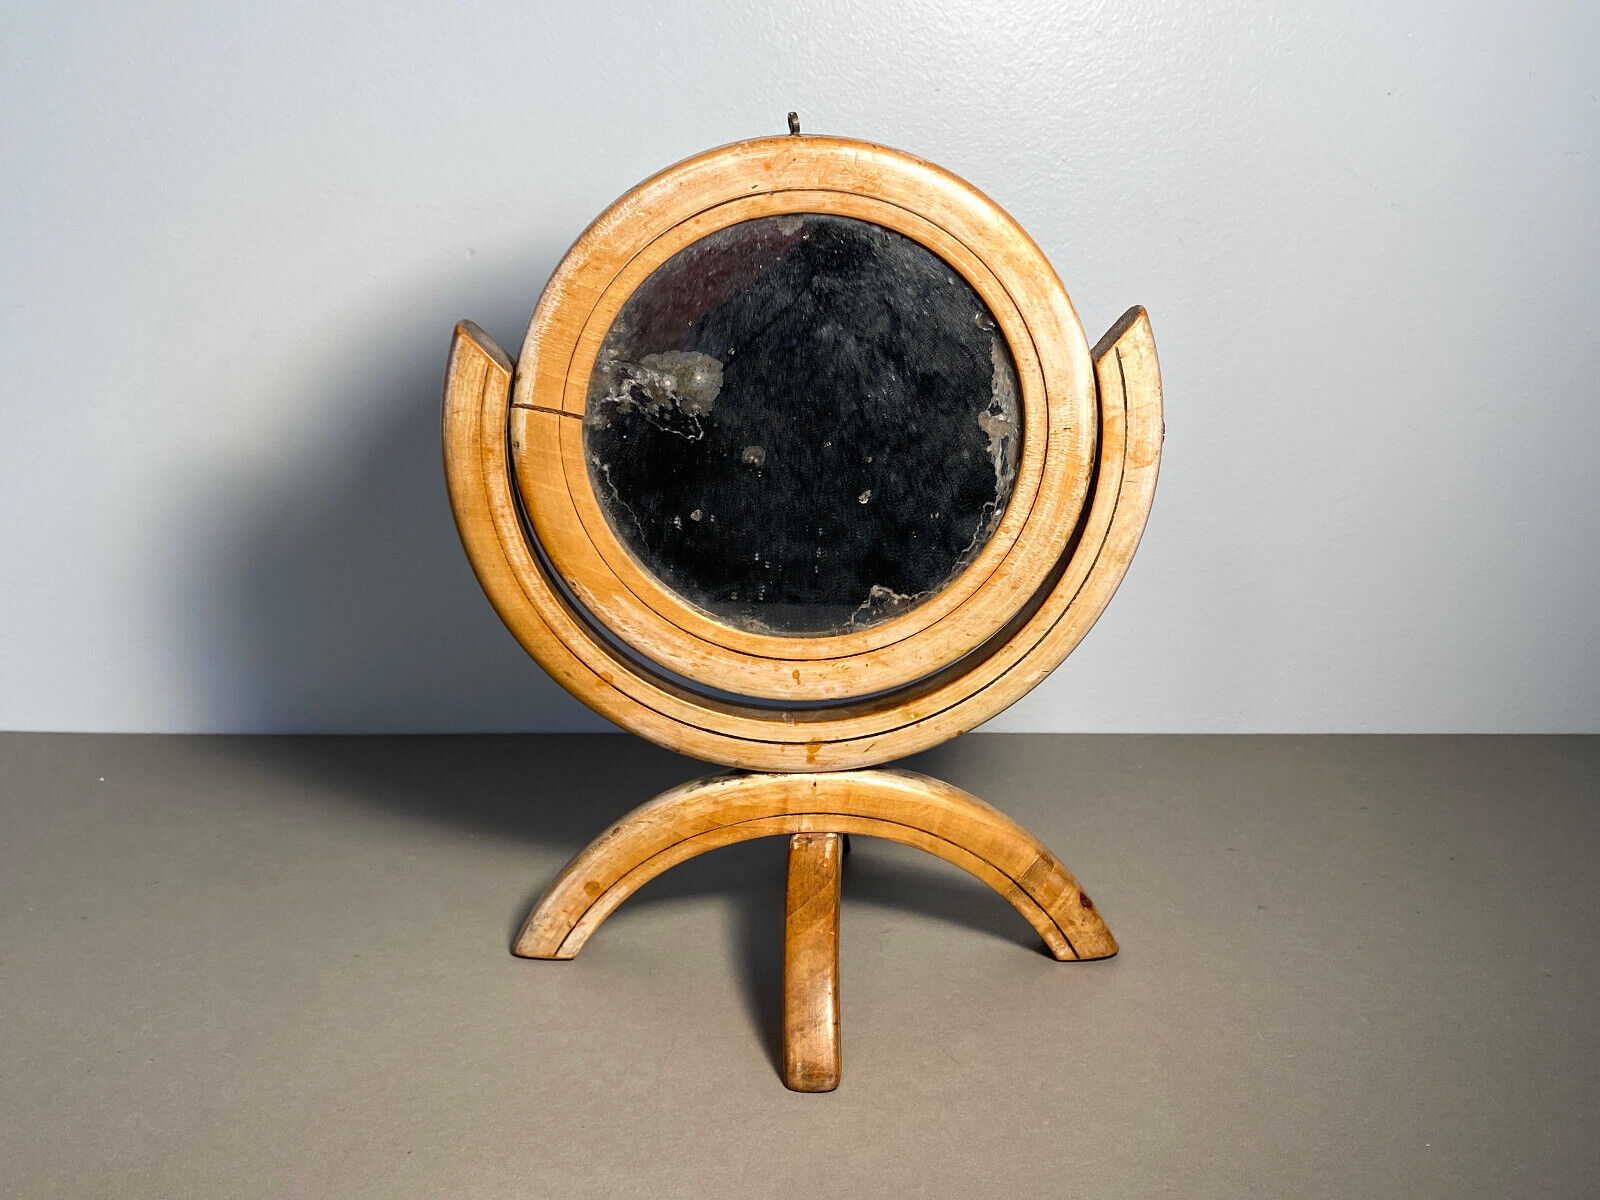 Antique Small Round Treen Mirror, Circular Feet, Standing Shaving Wall Hanging